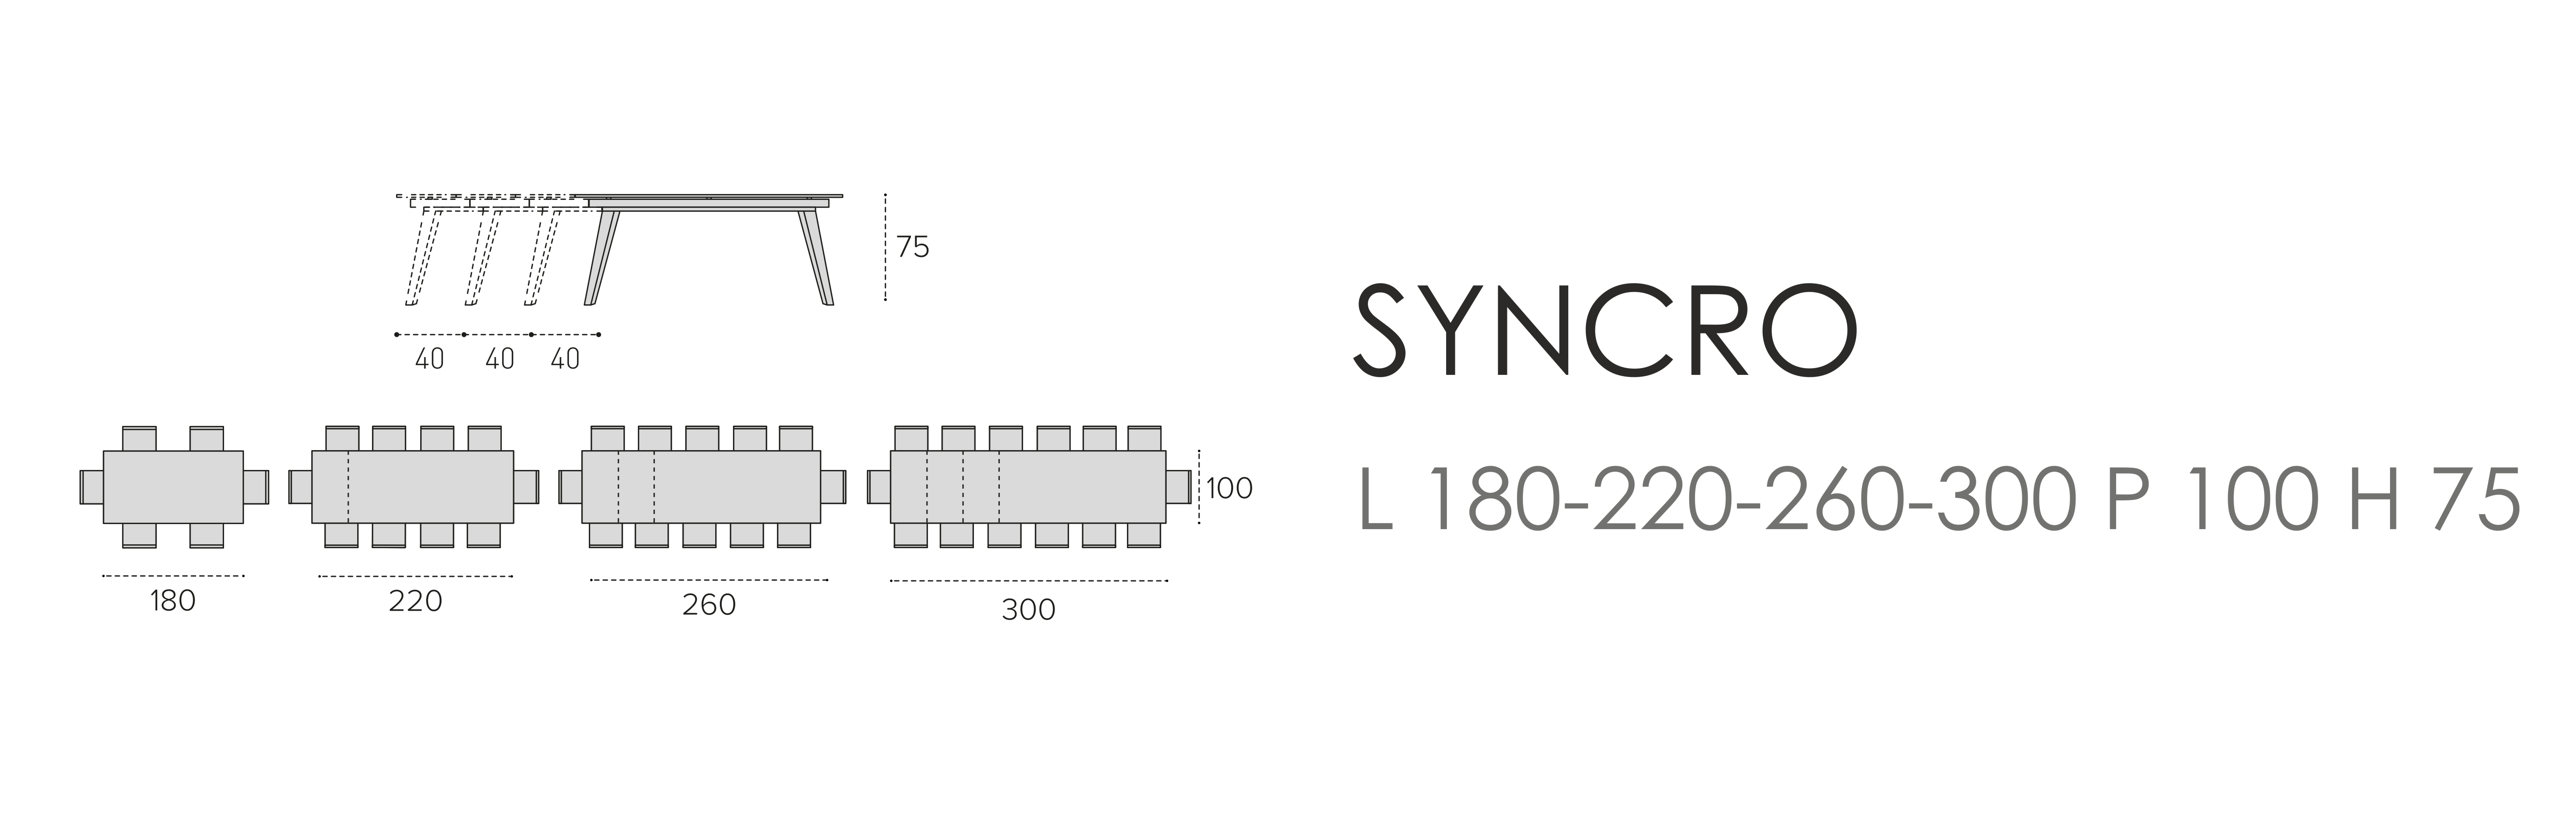 Syncro L 180-220-260-300 P 100 H 75